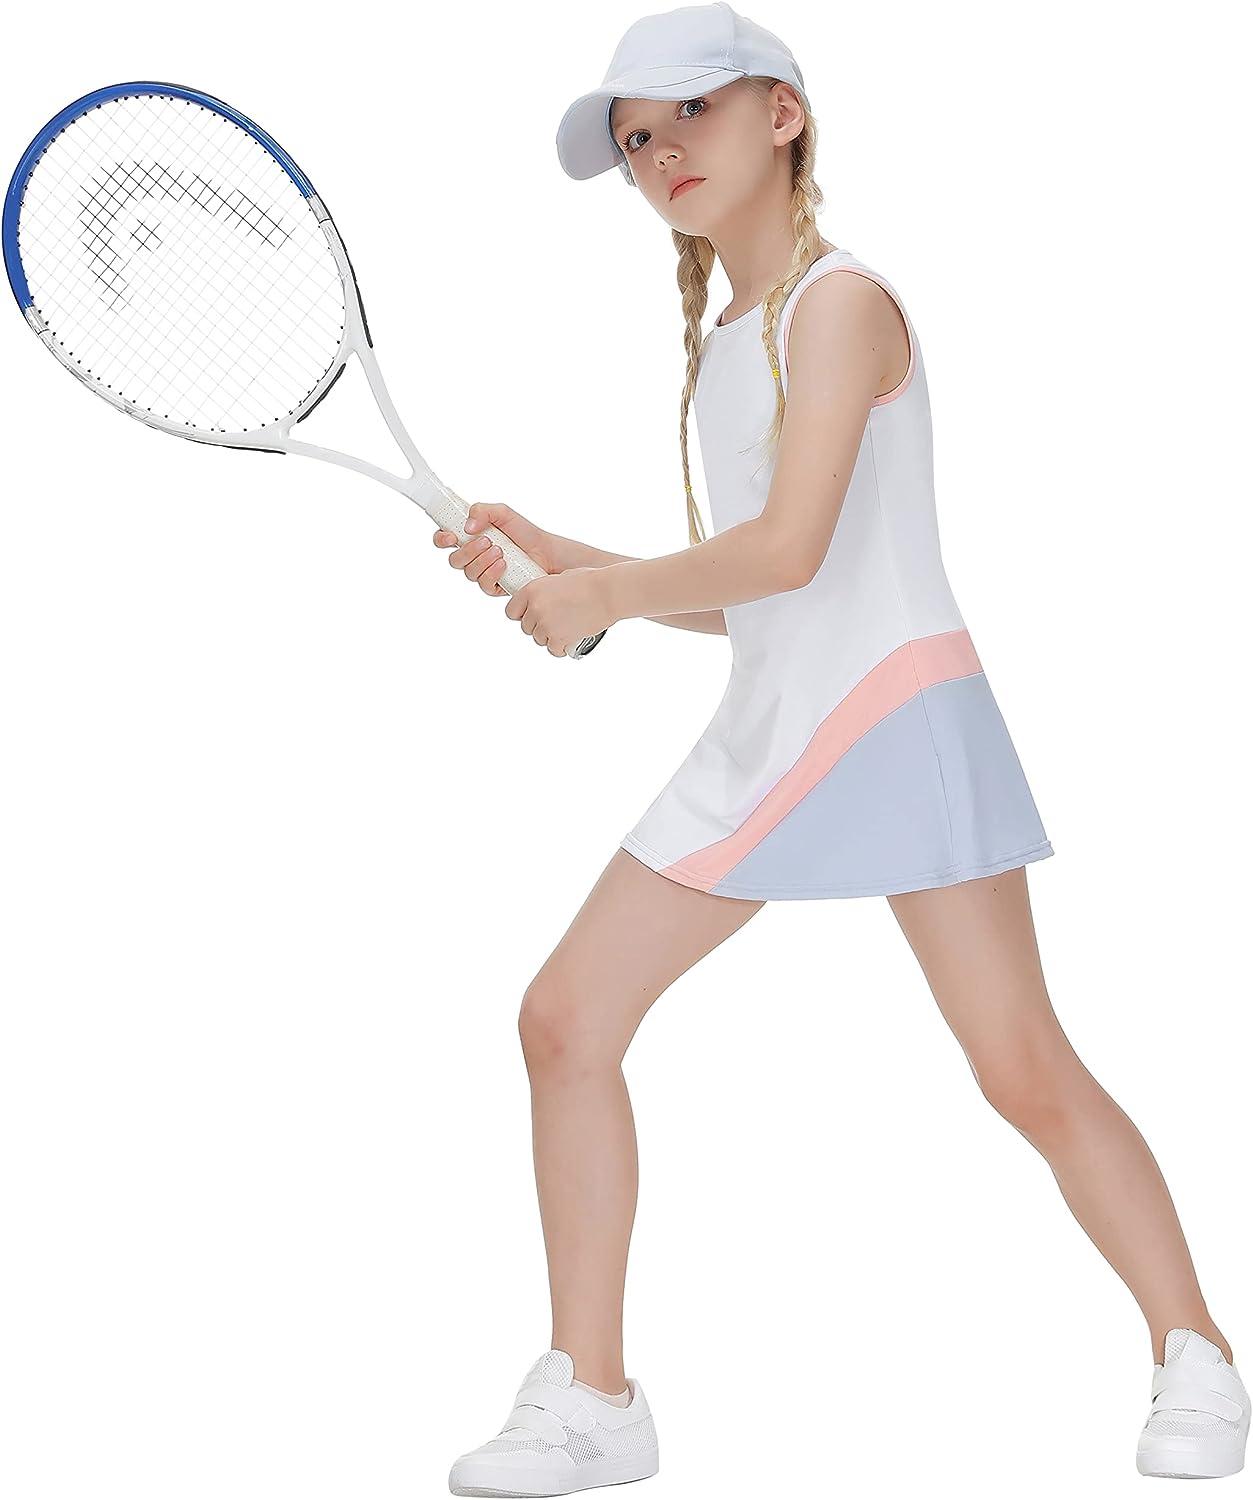  JACK SMITH Girls Tennis Dress with Short Sleeveless